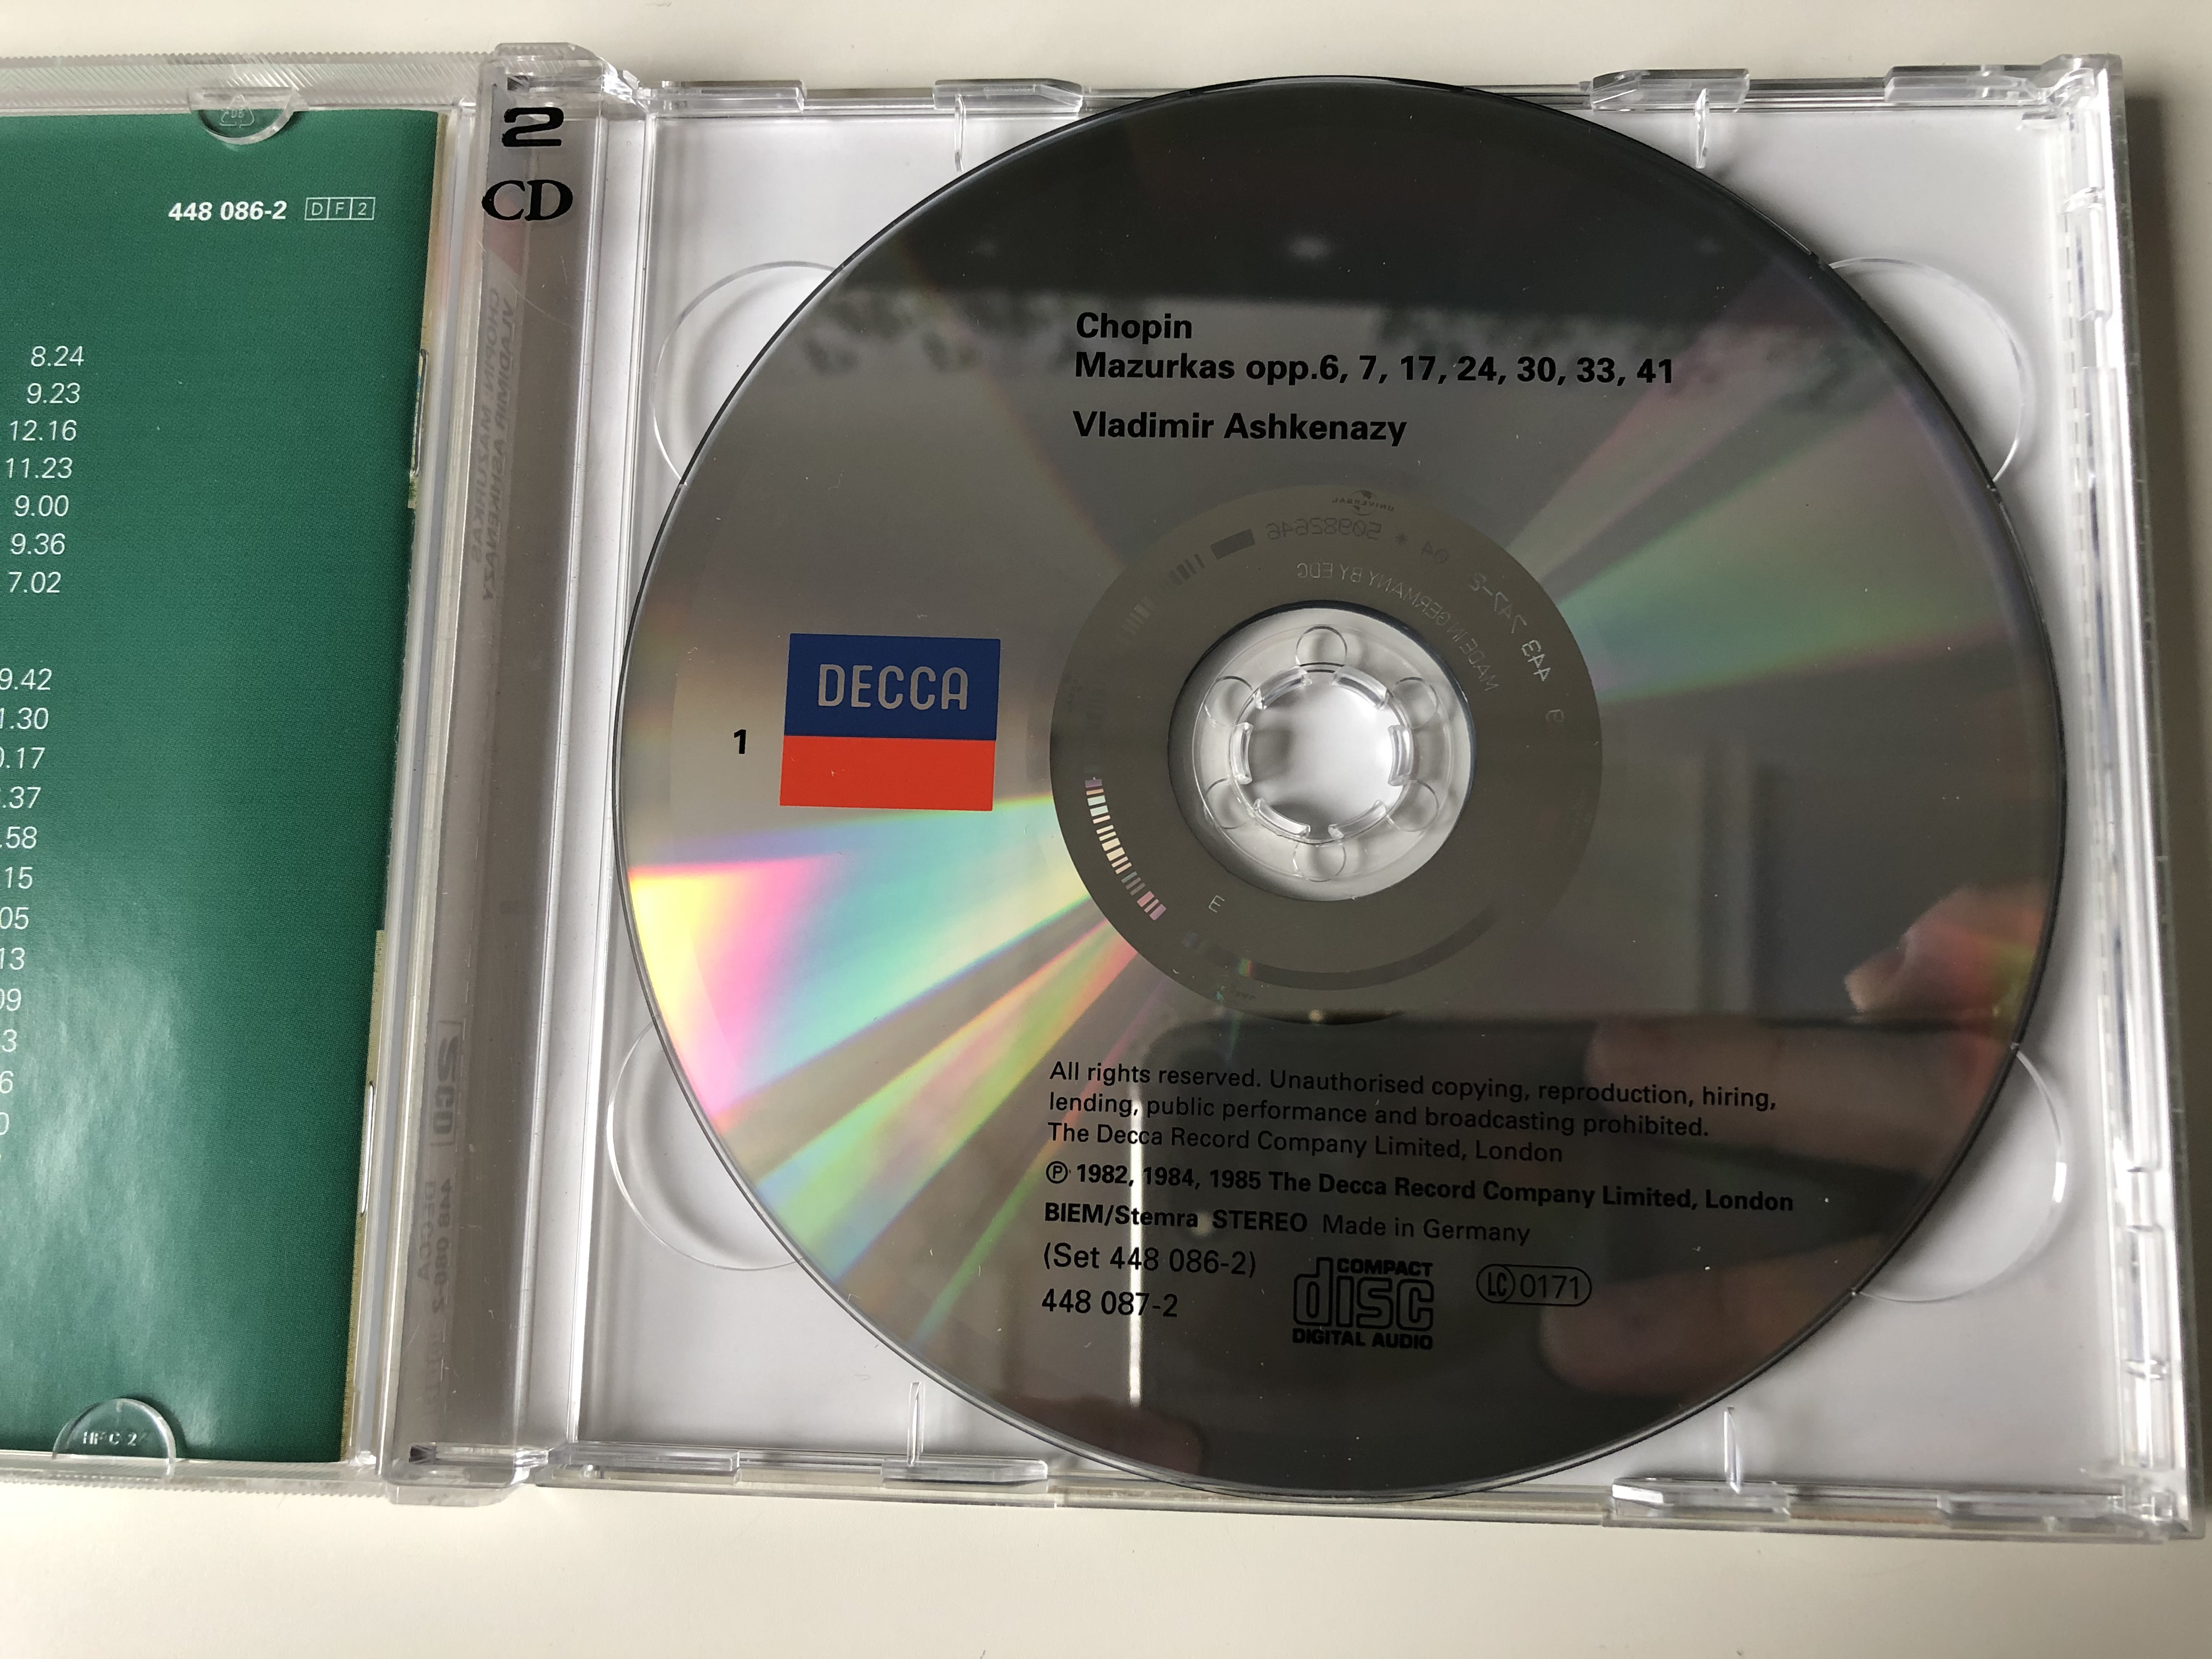 chopin-mazurkas-vladimir-ashkenazy-double-decca-decca-2x-audio-cd-1996-448-086-2-5-.jpg